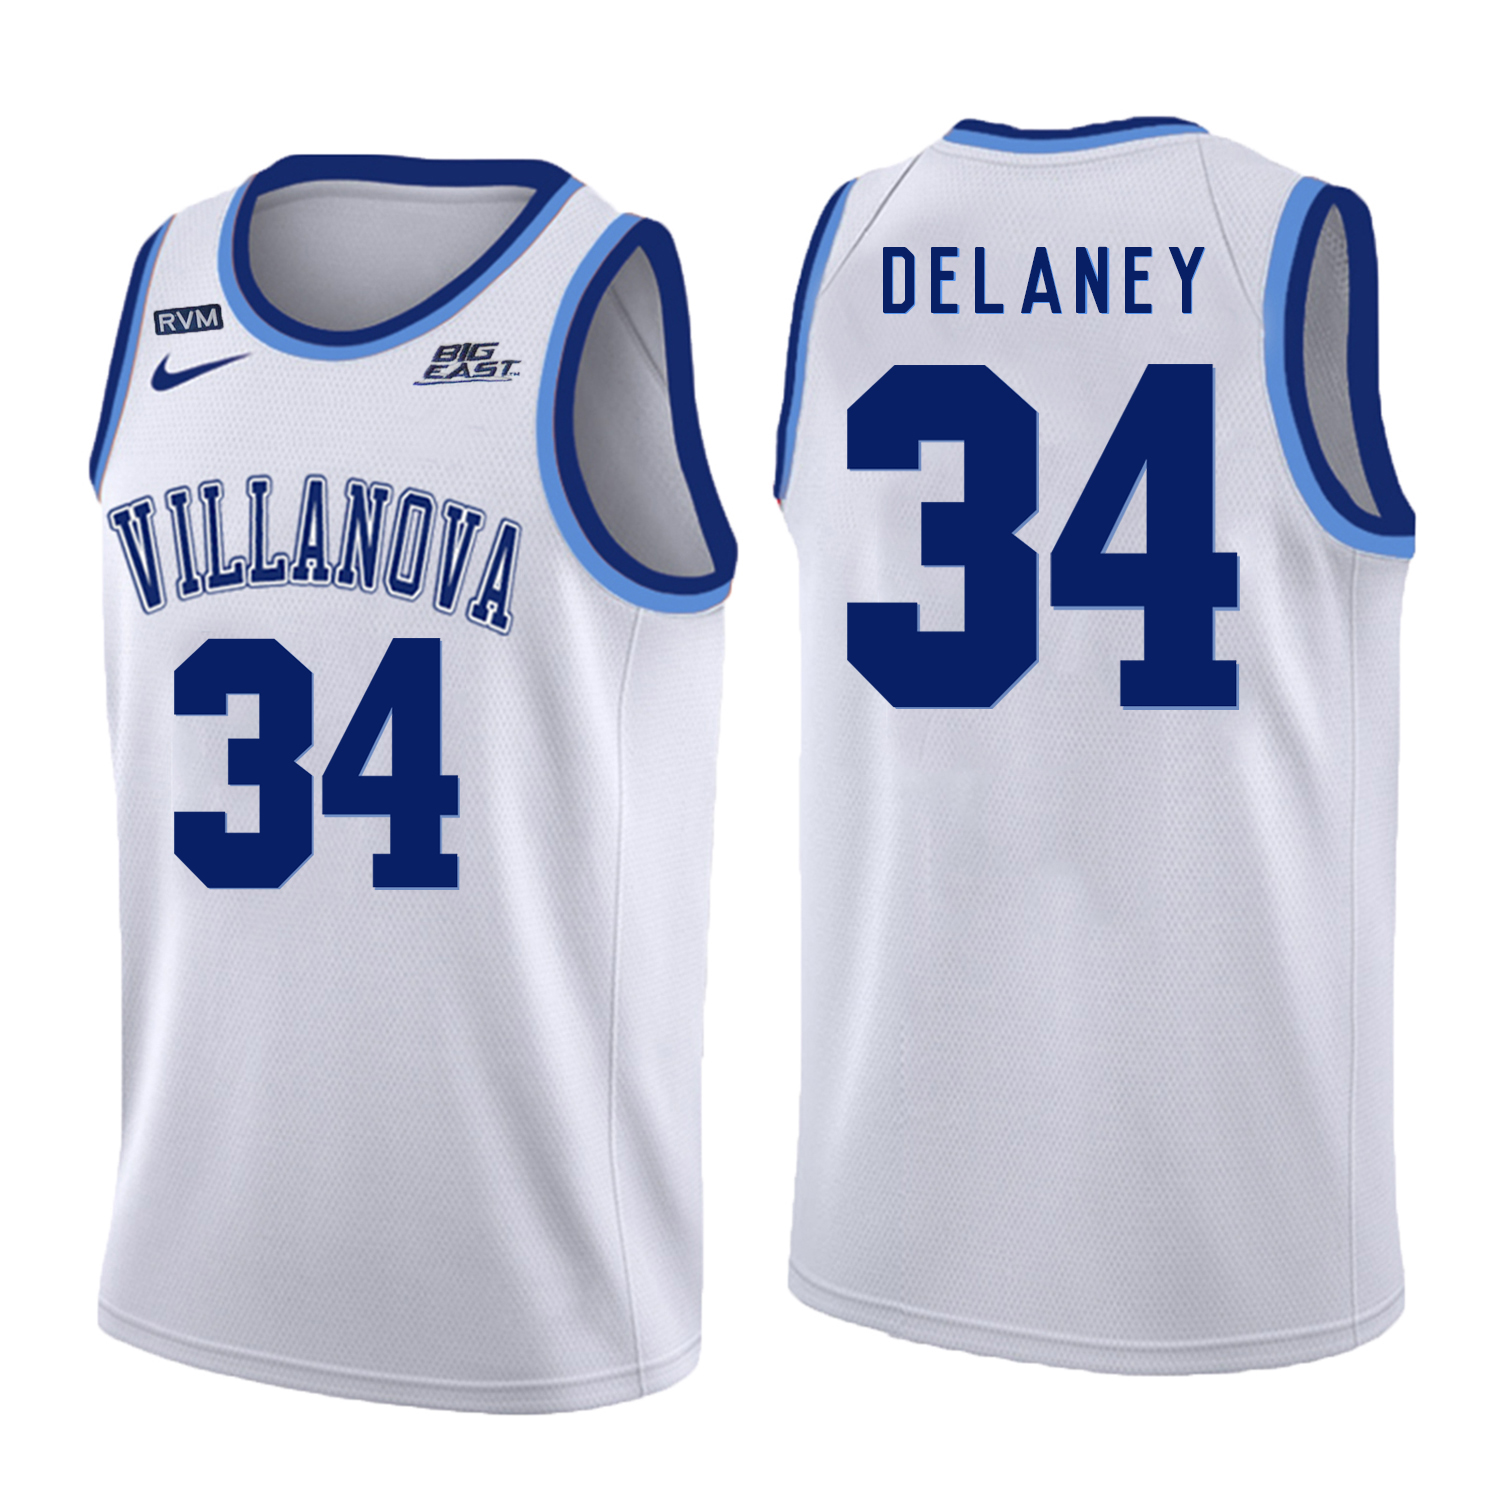 Villanova Wildcats 34 Tim Delaney White College Basketball Jersey